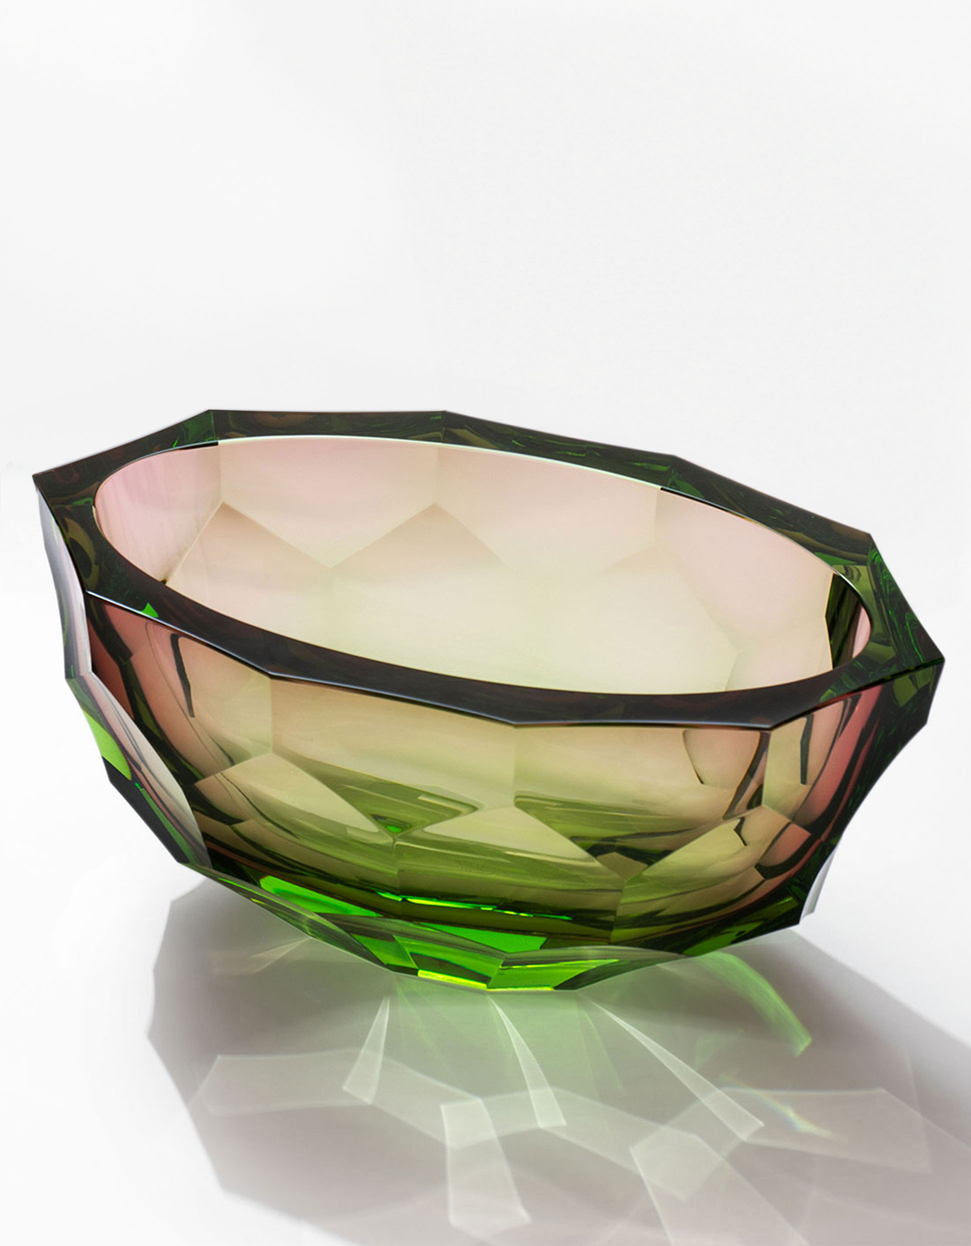 Caorle bowl, 19 cm - gallery #1